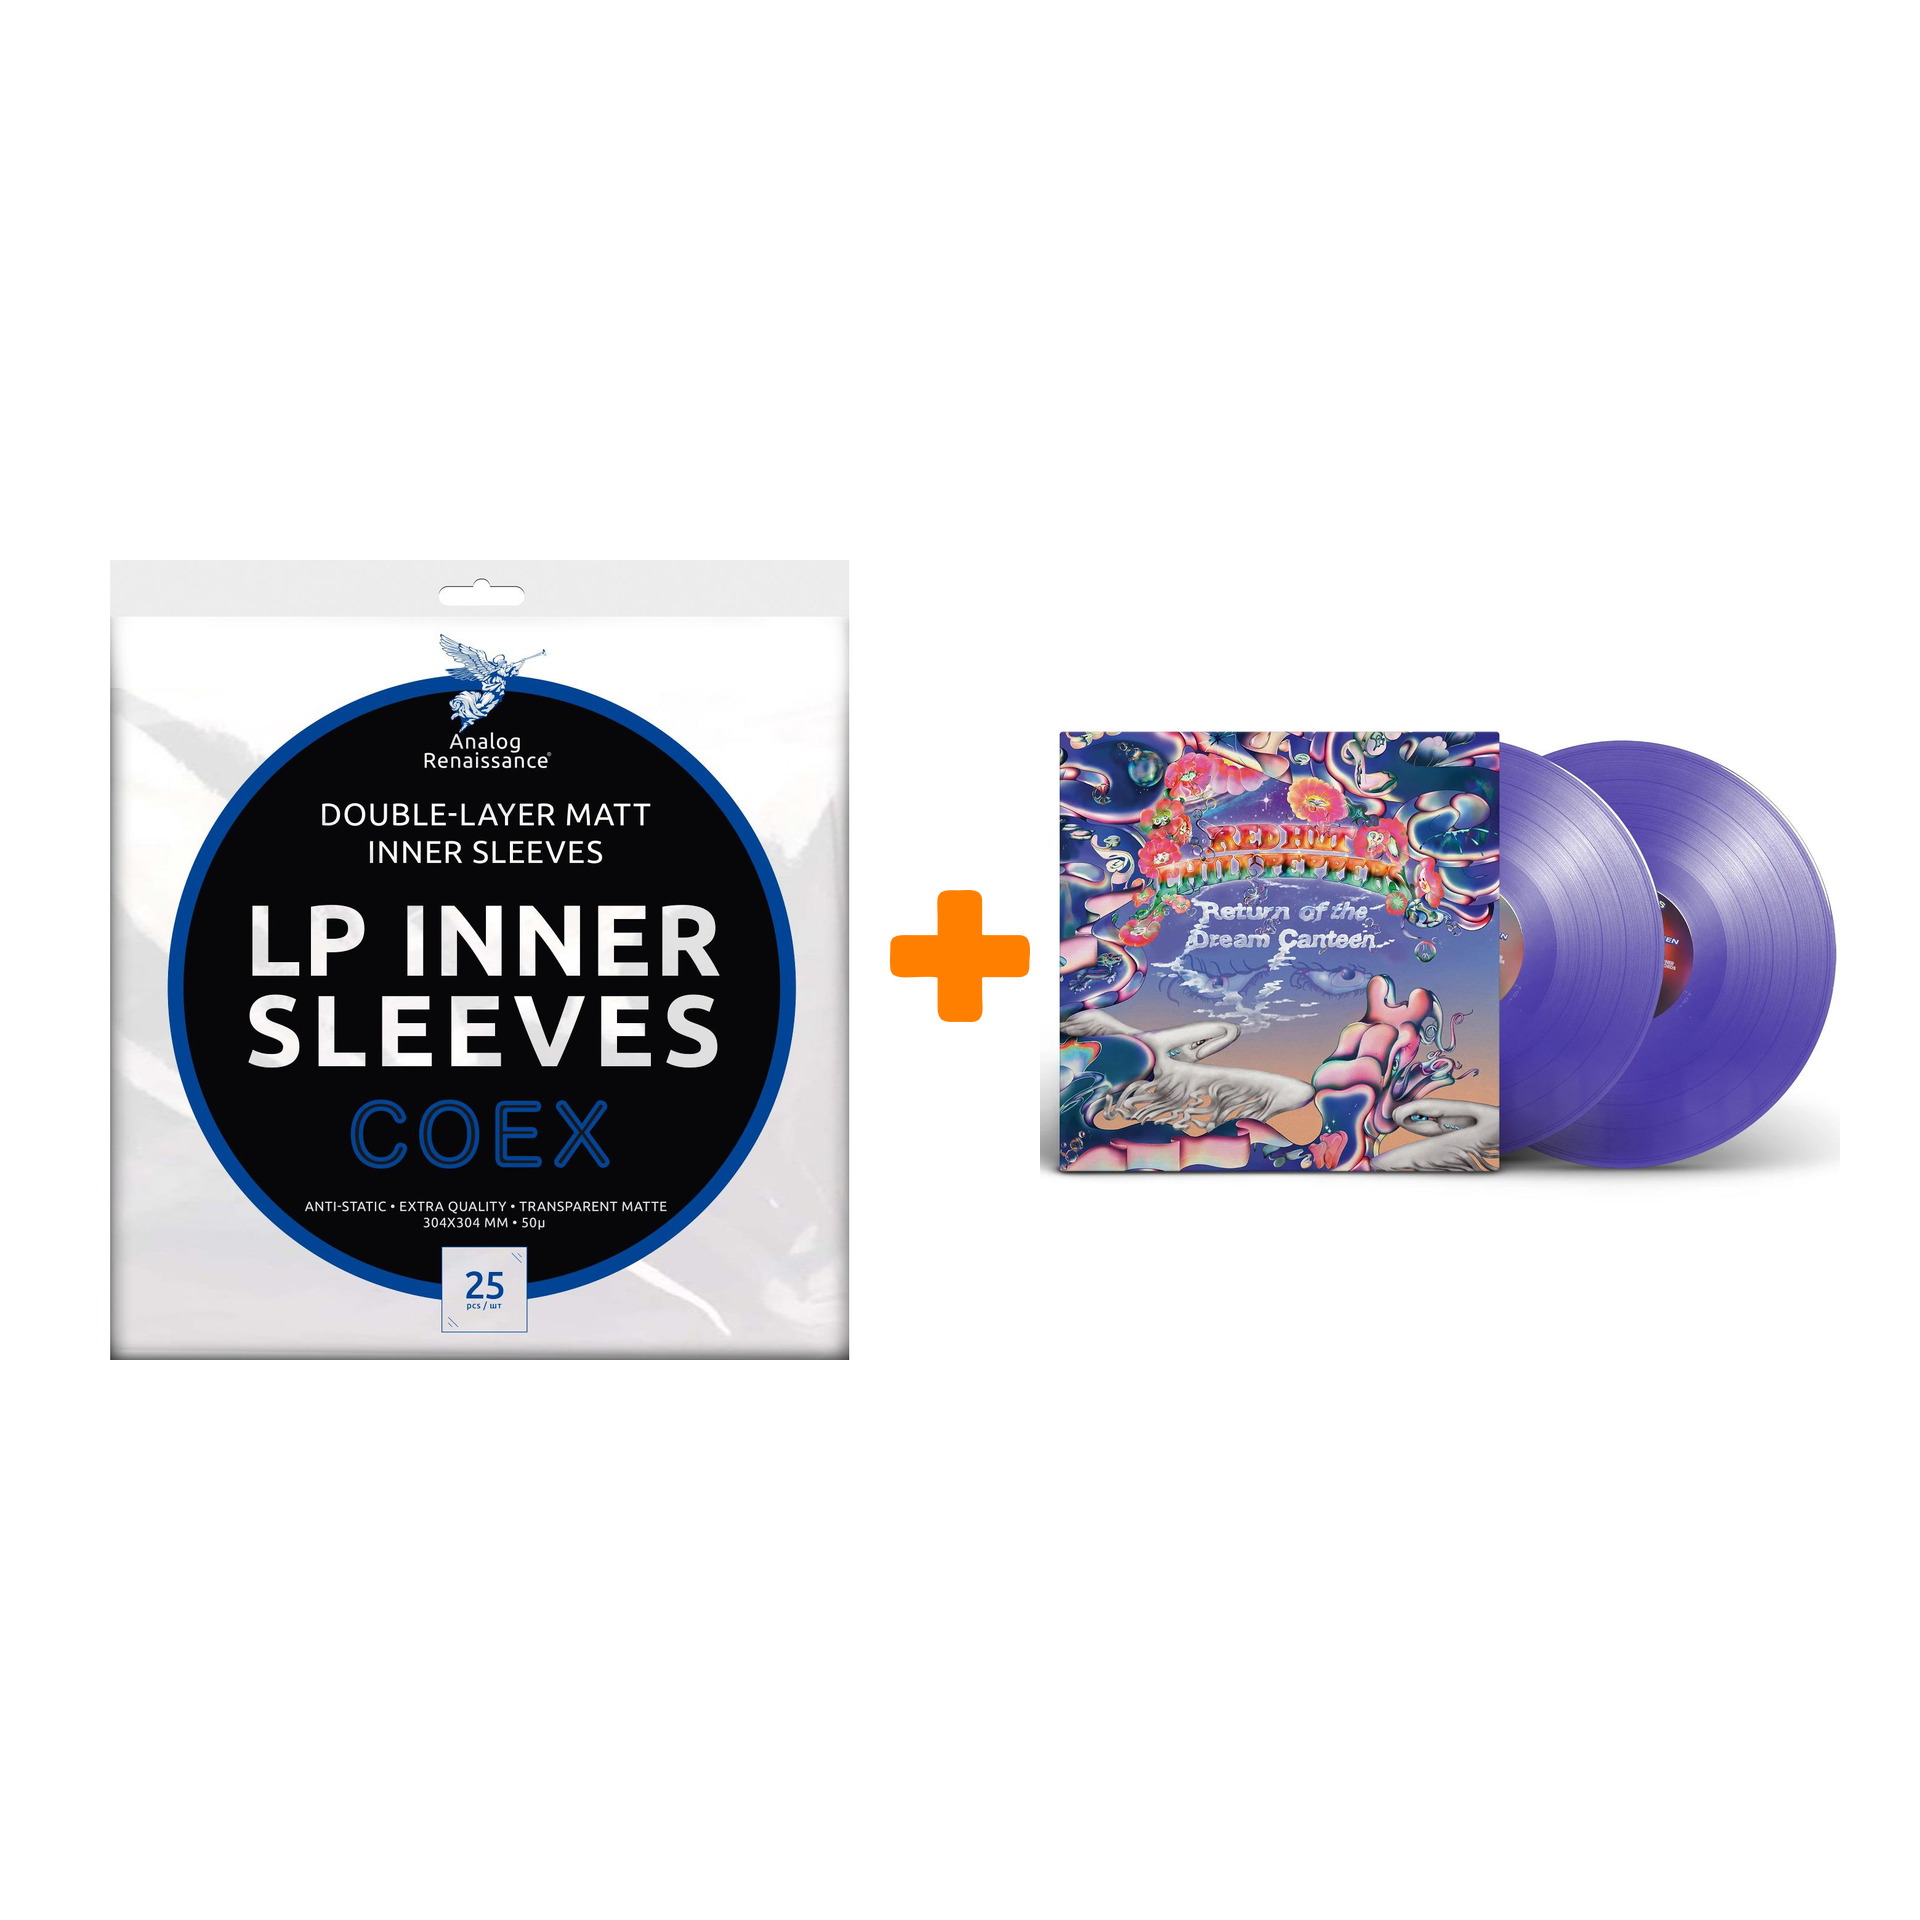 RED HOT CHILI PEPPERS Return Of The Dream Canteen Coloured Purple Vinyl 2LP + Конверты внутренние COEX для грампластинок 12 25шт Набор цена и фото